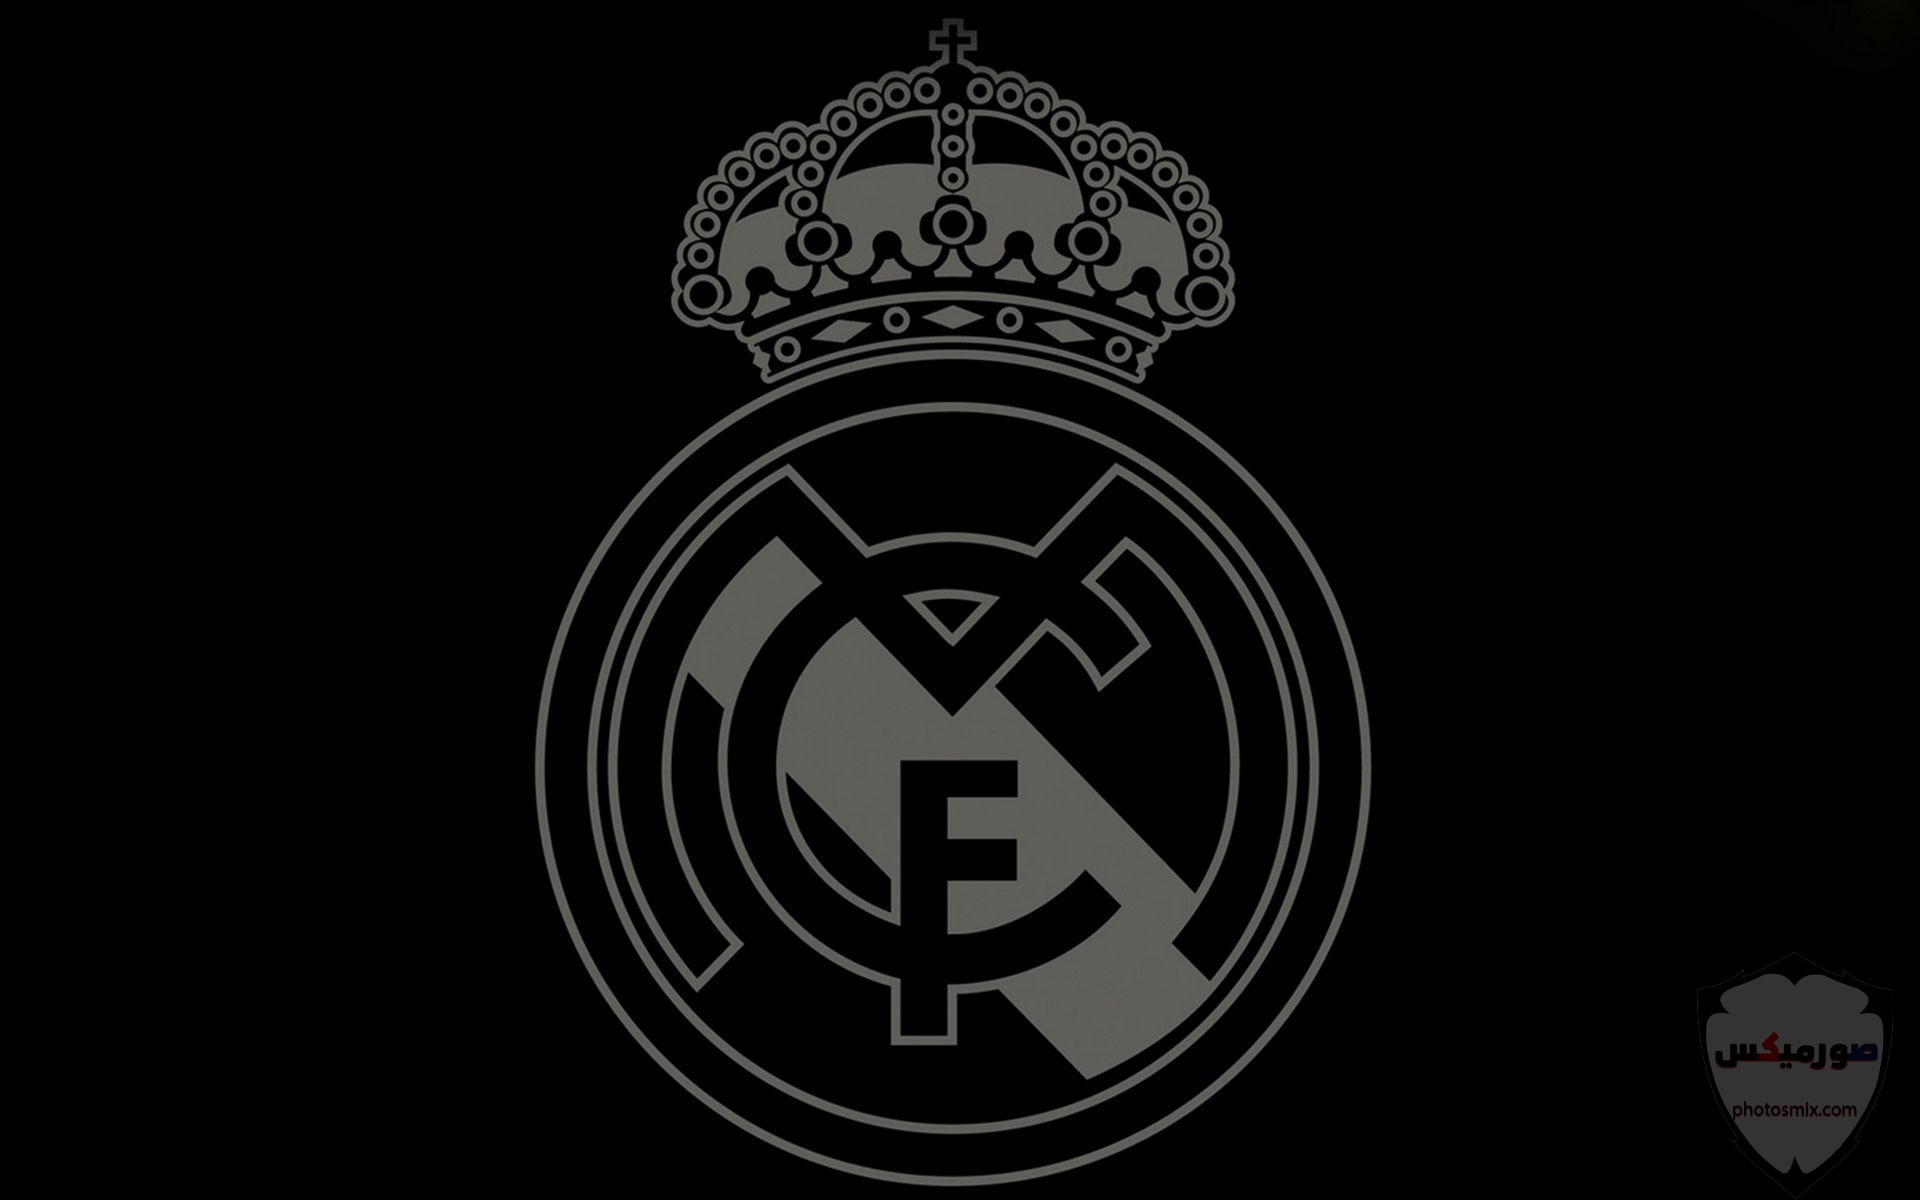 صور ريال مدريد 2020خلفيات ورمزيات ريال مدريد صور لاعبي ريال مدريد real madrid 26